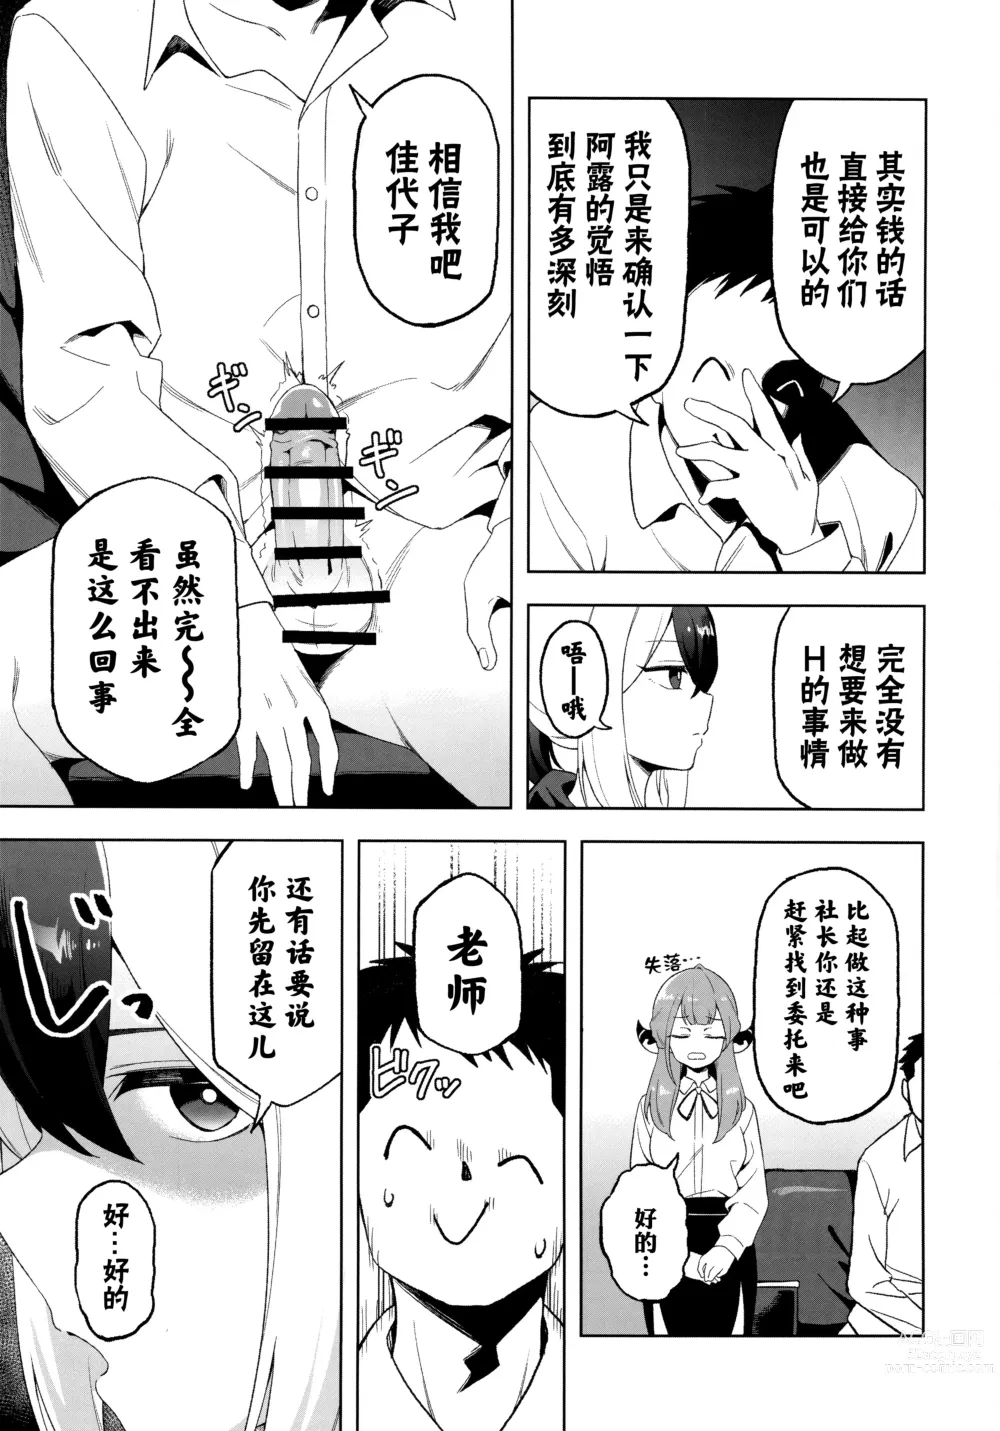 Page 5 of doujinshi 佳代子出卖身体